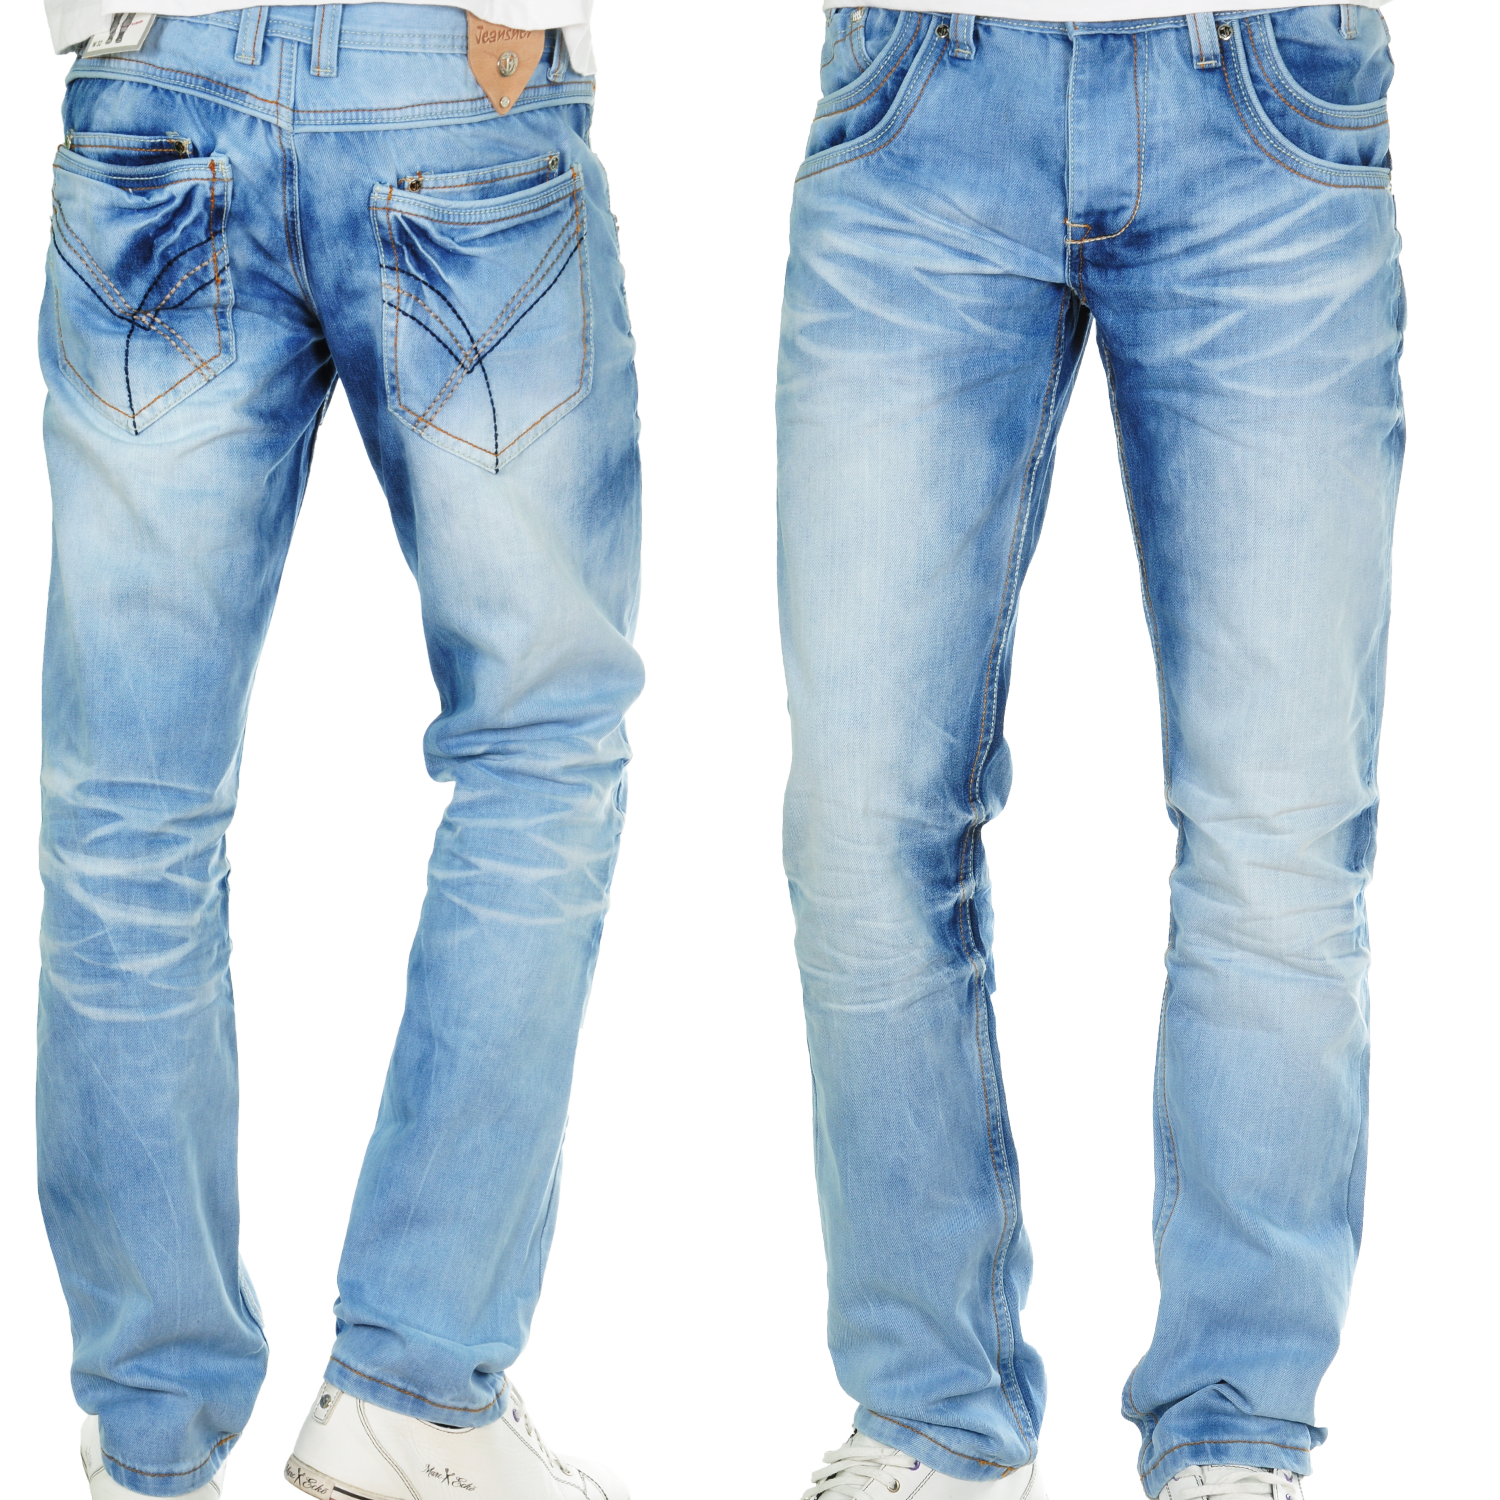 Foto Milano Style Jeansnet Regular Fit Jeans Azul Claro foto 16288